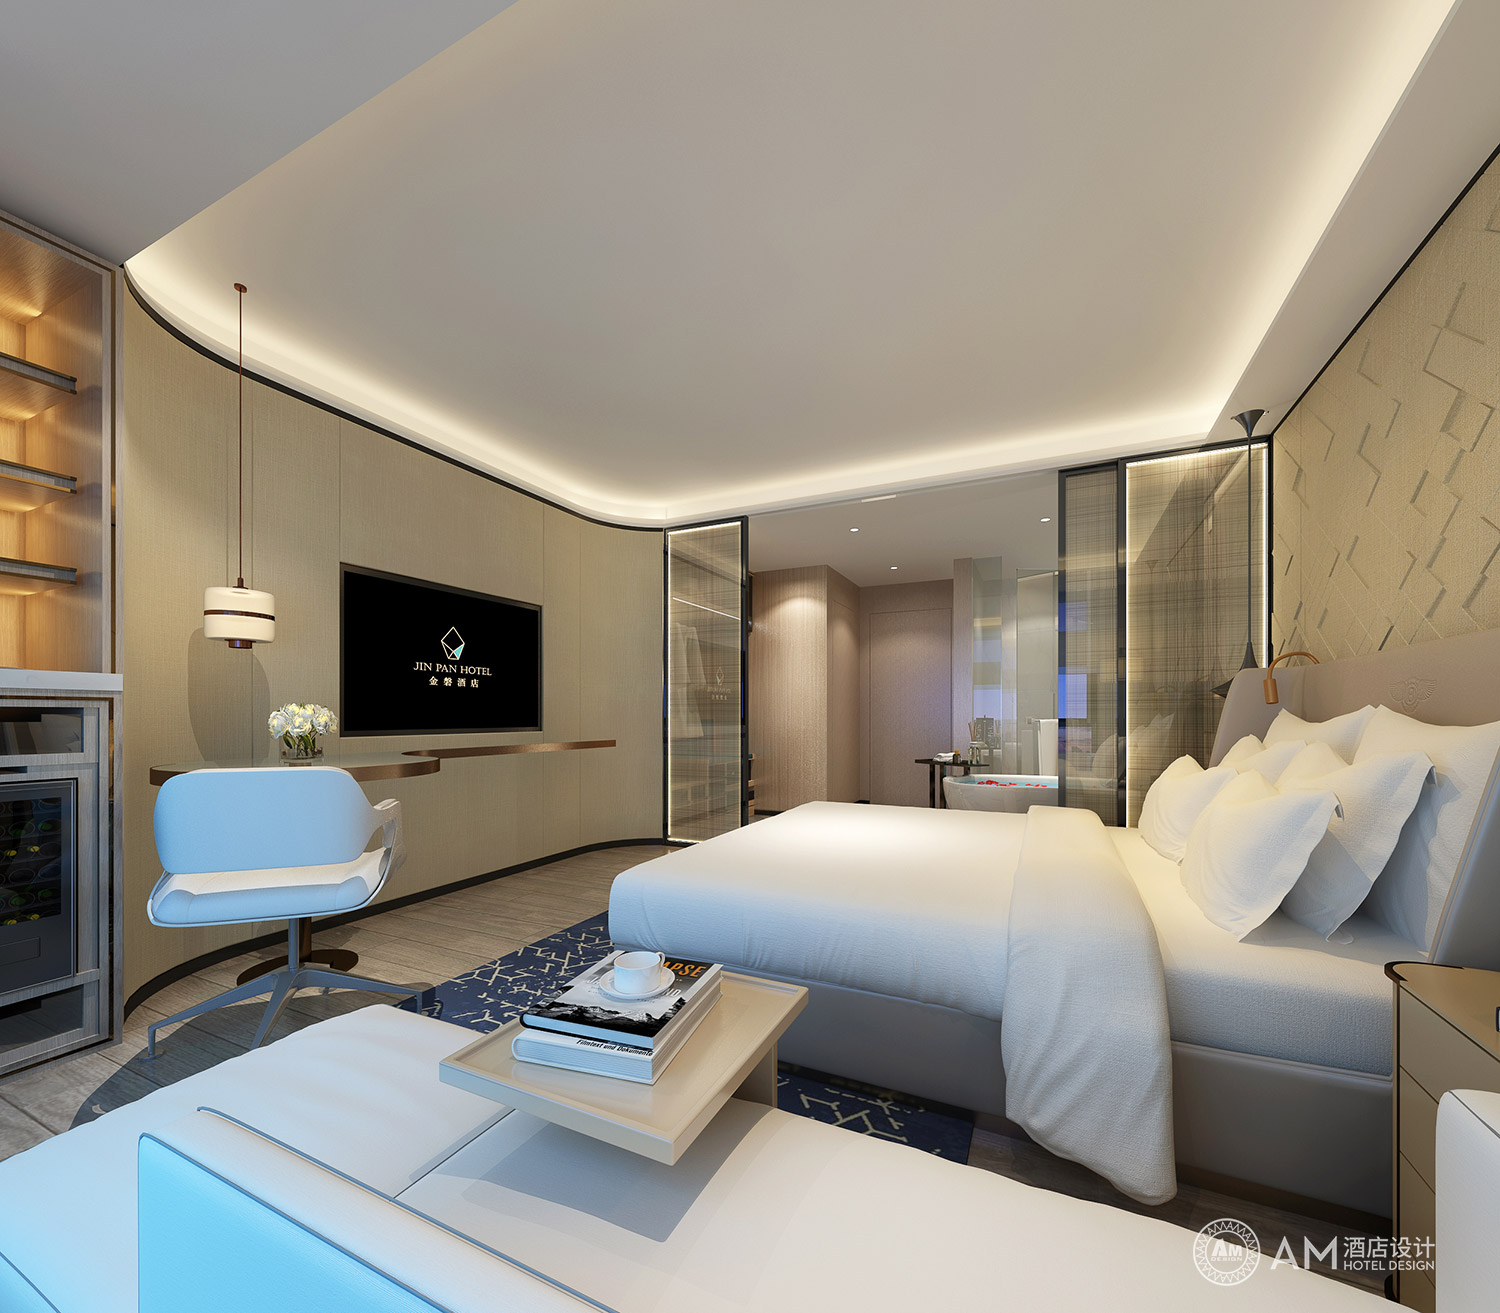 AM DESIGN | Guest room design of shanxi Jinpan Hotel